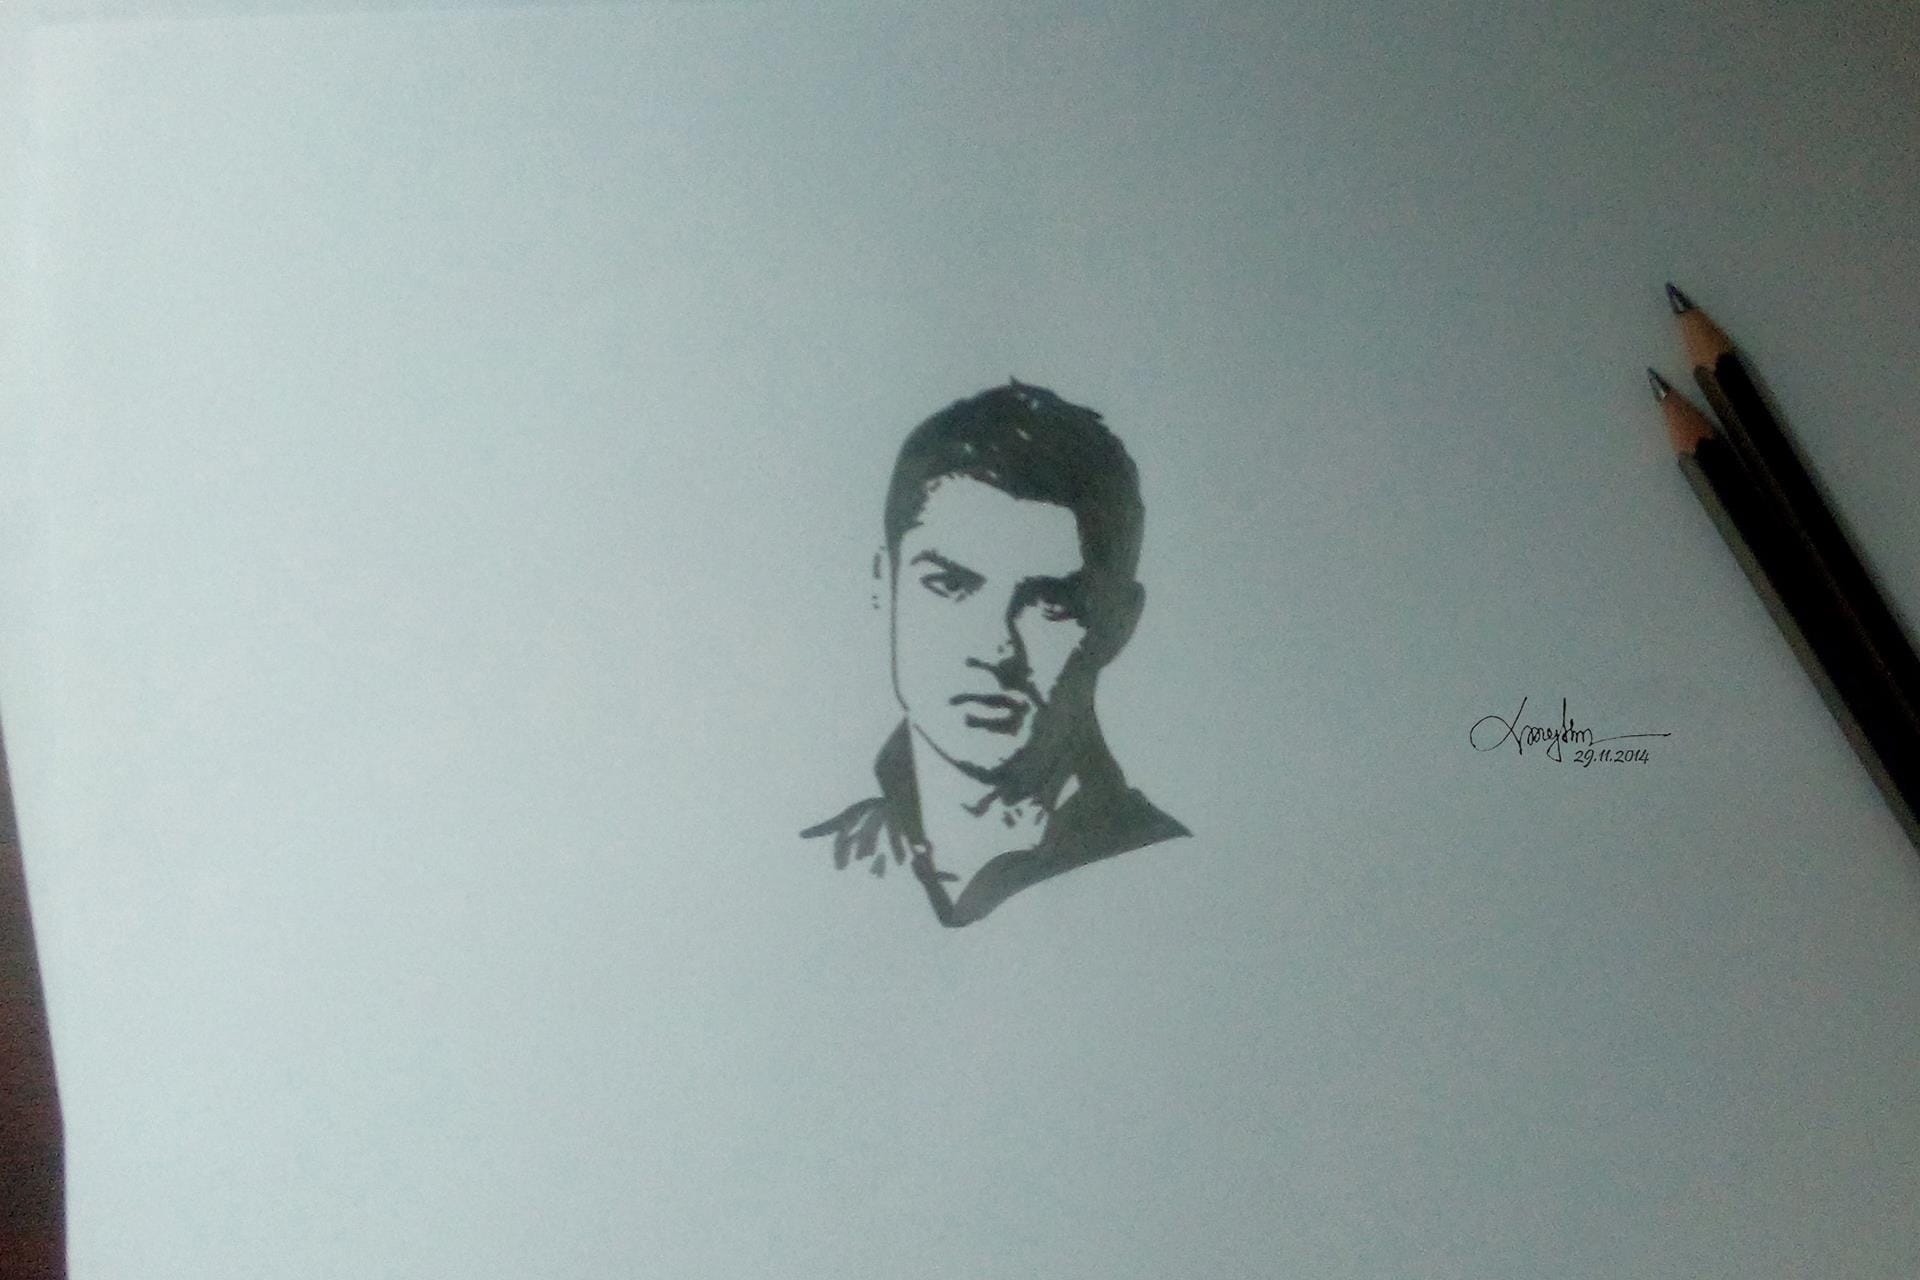 Cristiano Ronaldo sketch by Rhythm Shahriar